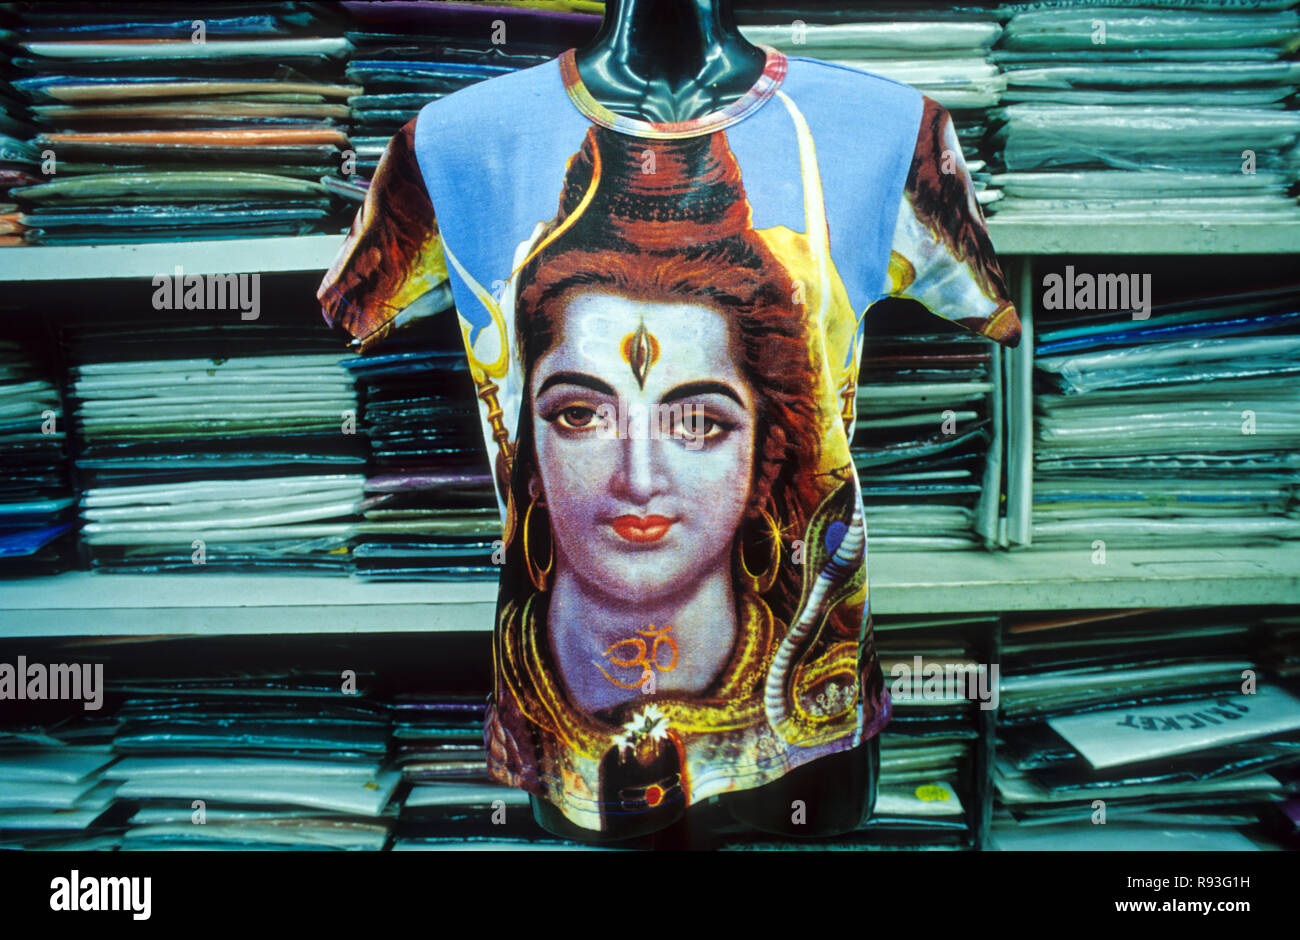 Hindu God on T-shirt Stock Photo